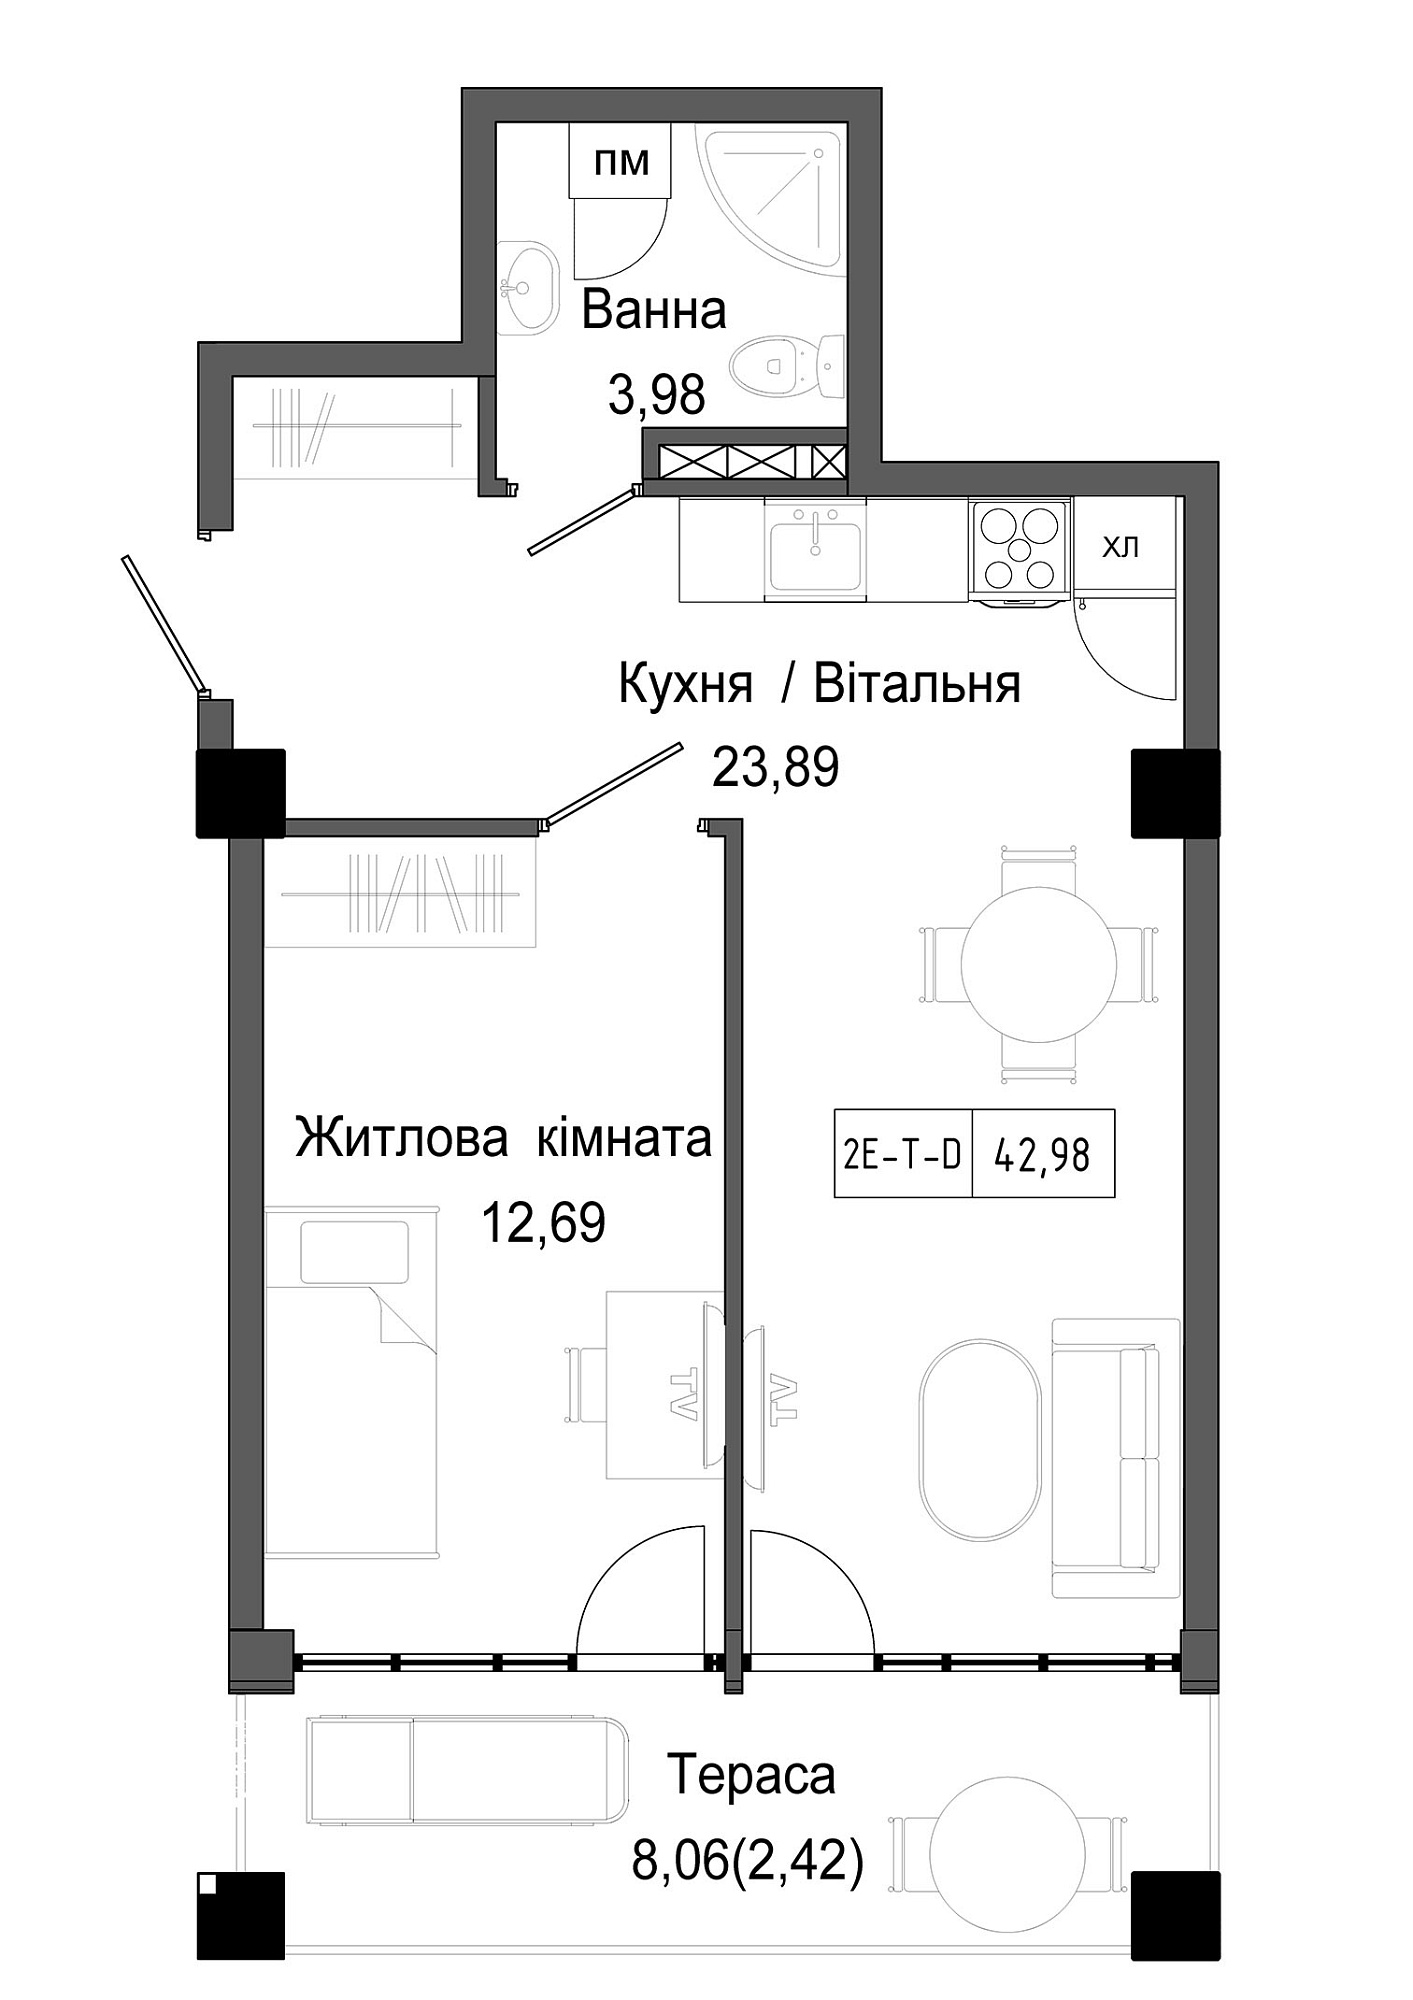 Planning 1-rm flats area 42.98m2, UM-006-05/0006.